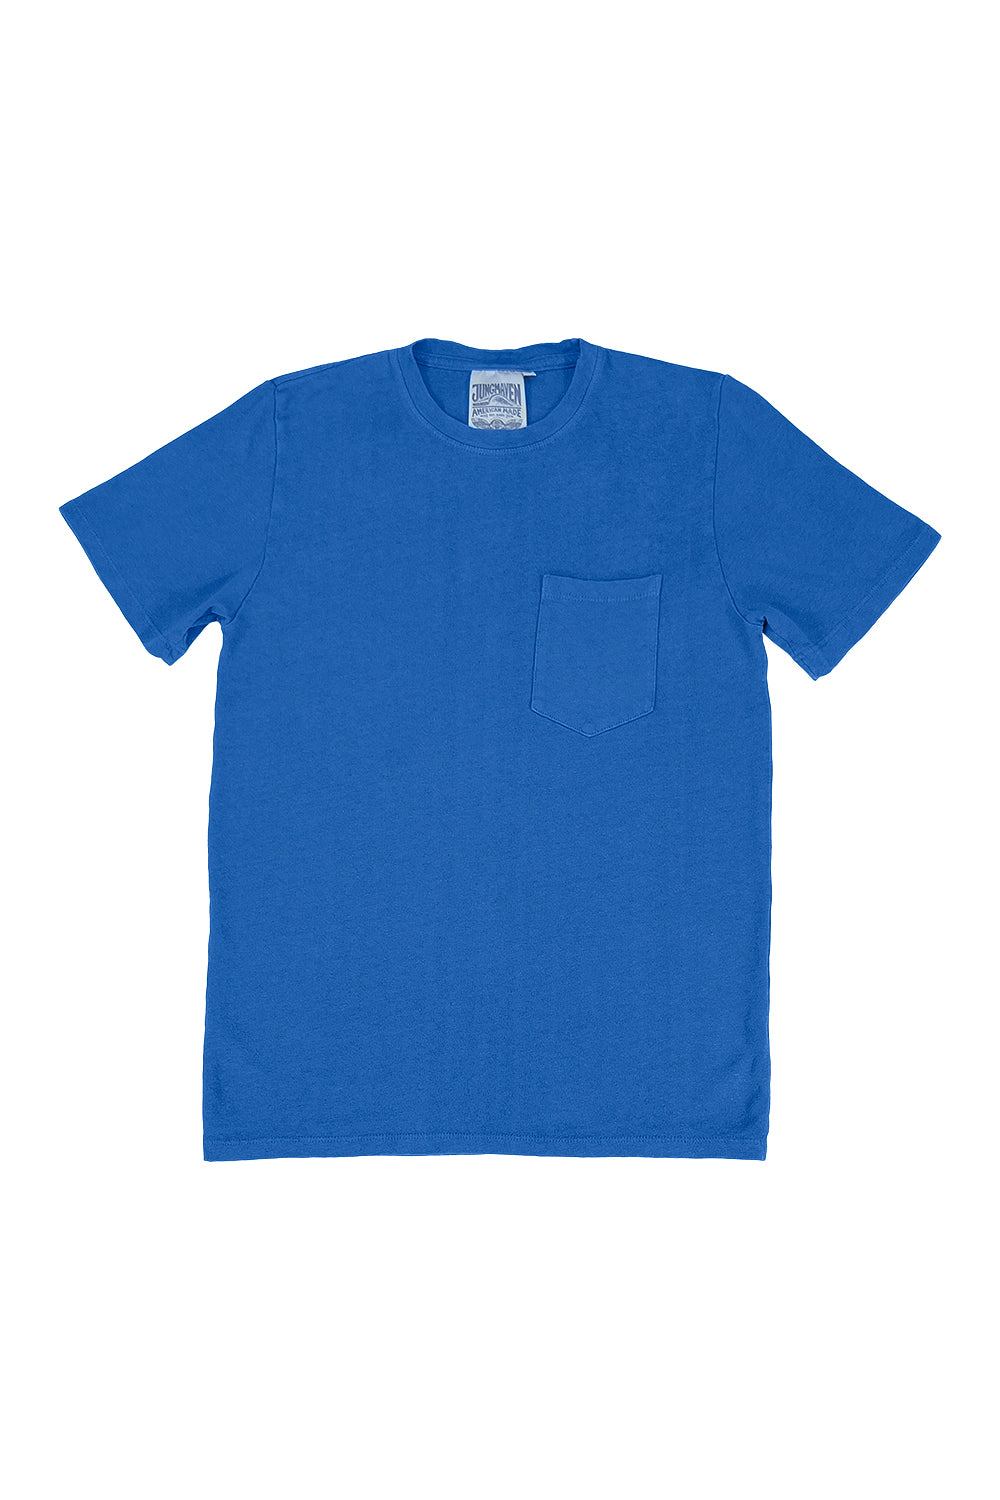 Boulder Pocket Tee | Jungmaven Hemp Clothing & Accessories / Color: Galaxy Blue